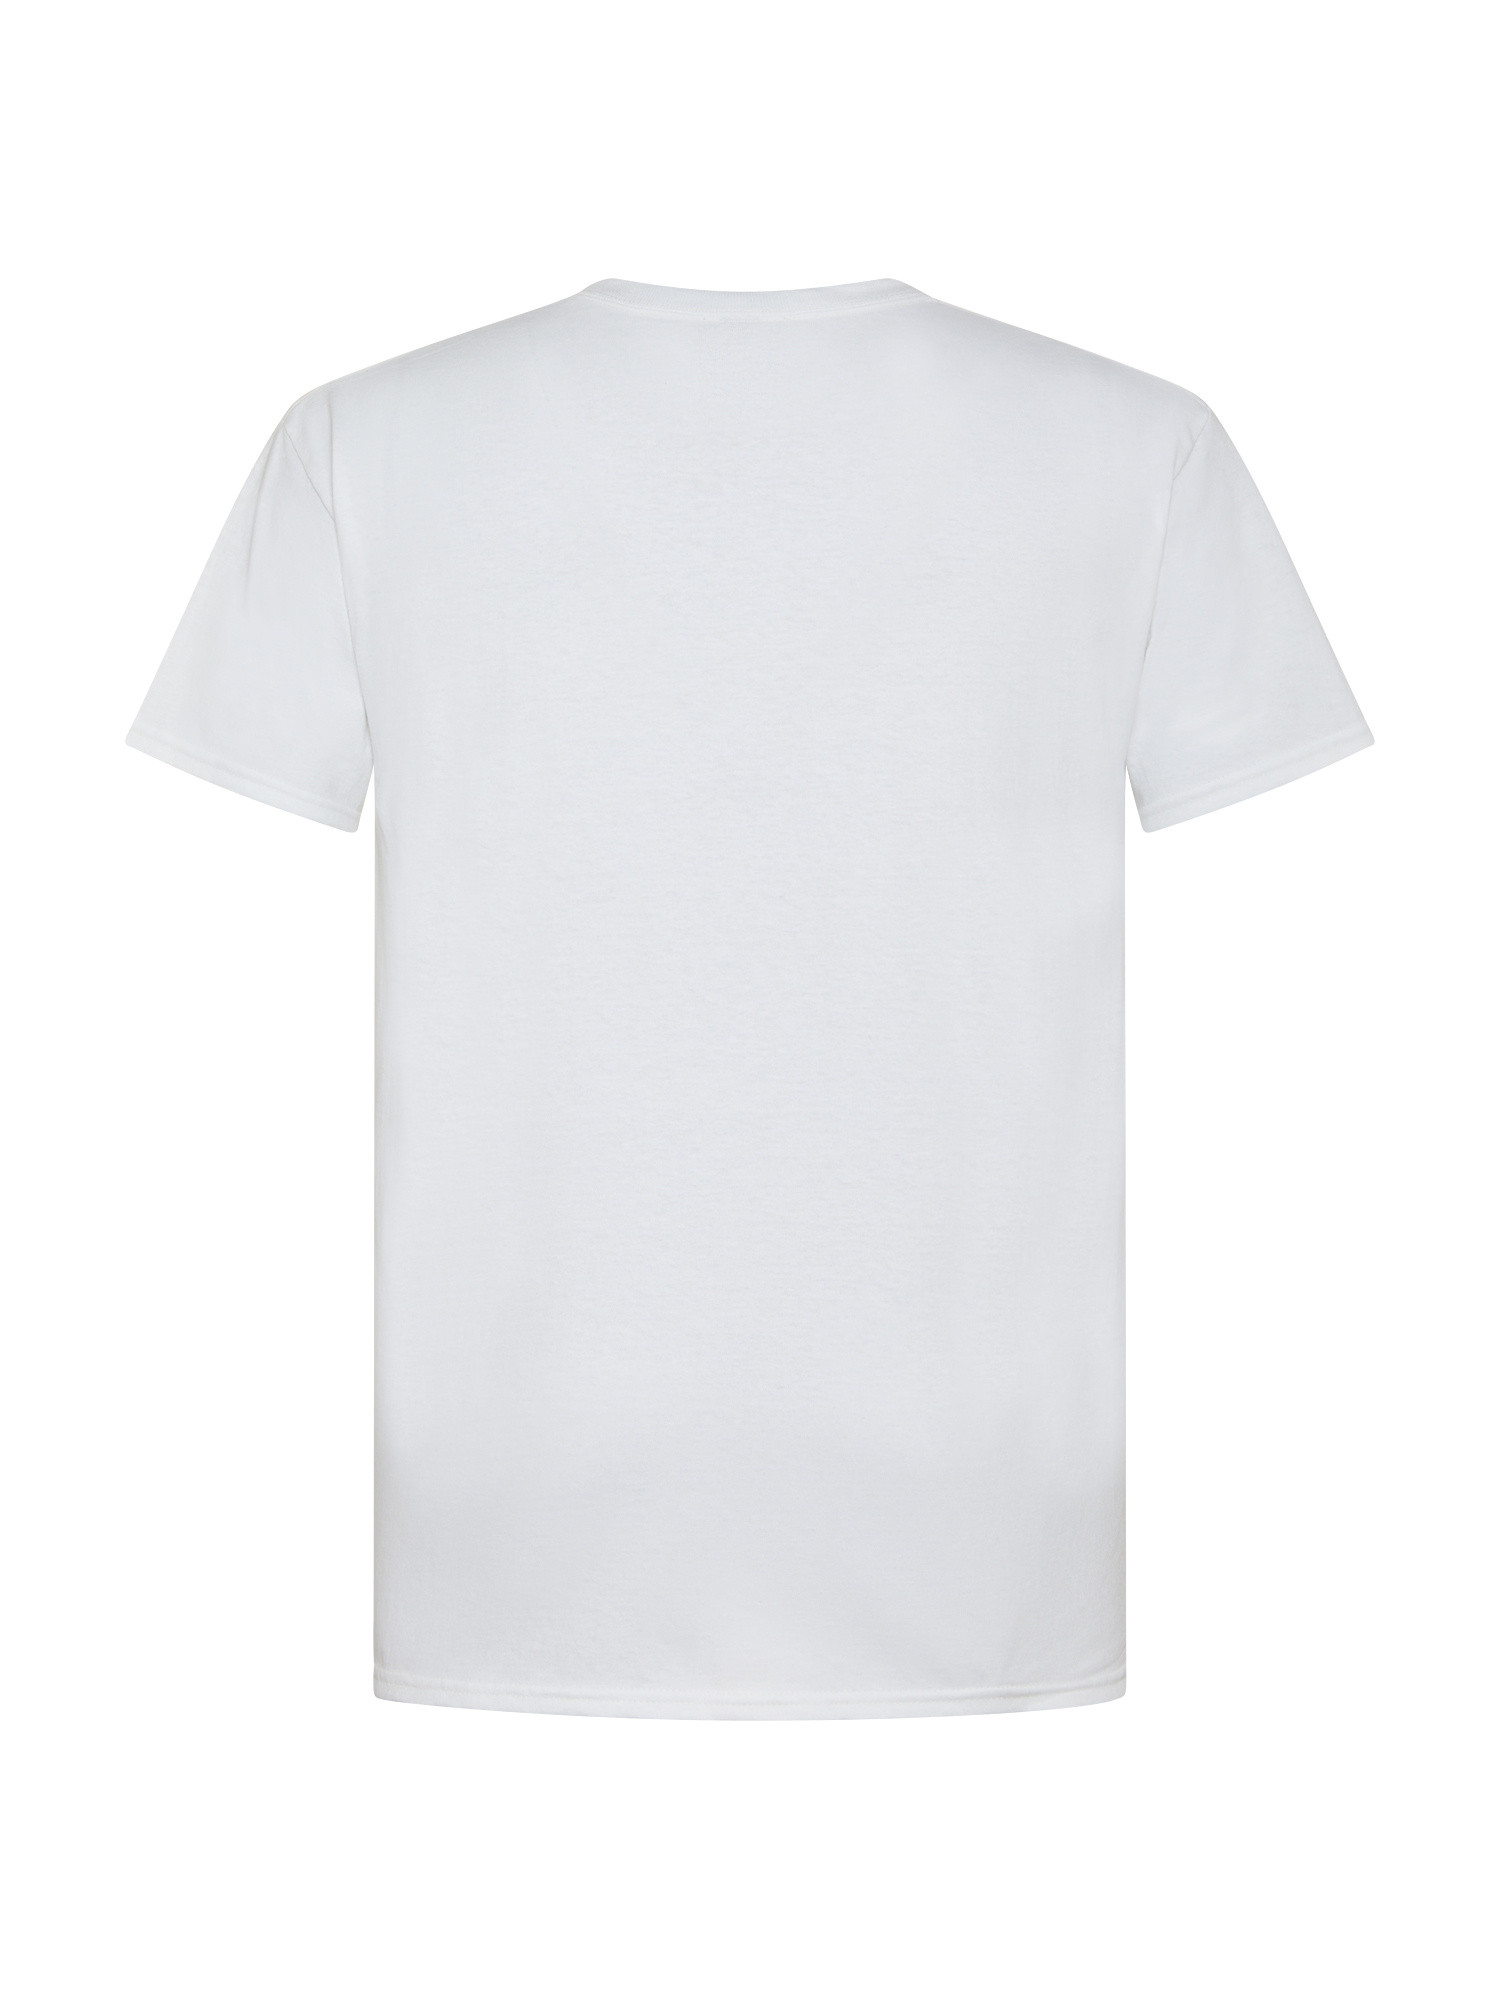 Thrasher - Flames logo T-Shirt, White, large image number 1